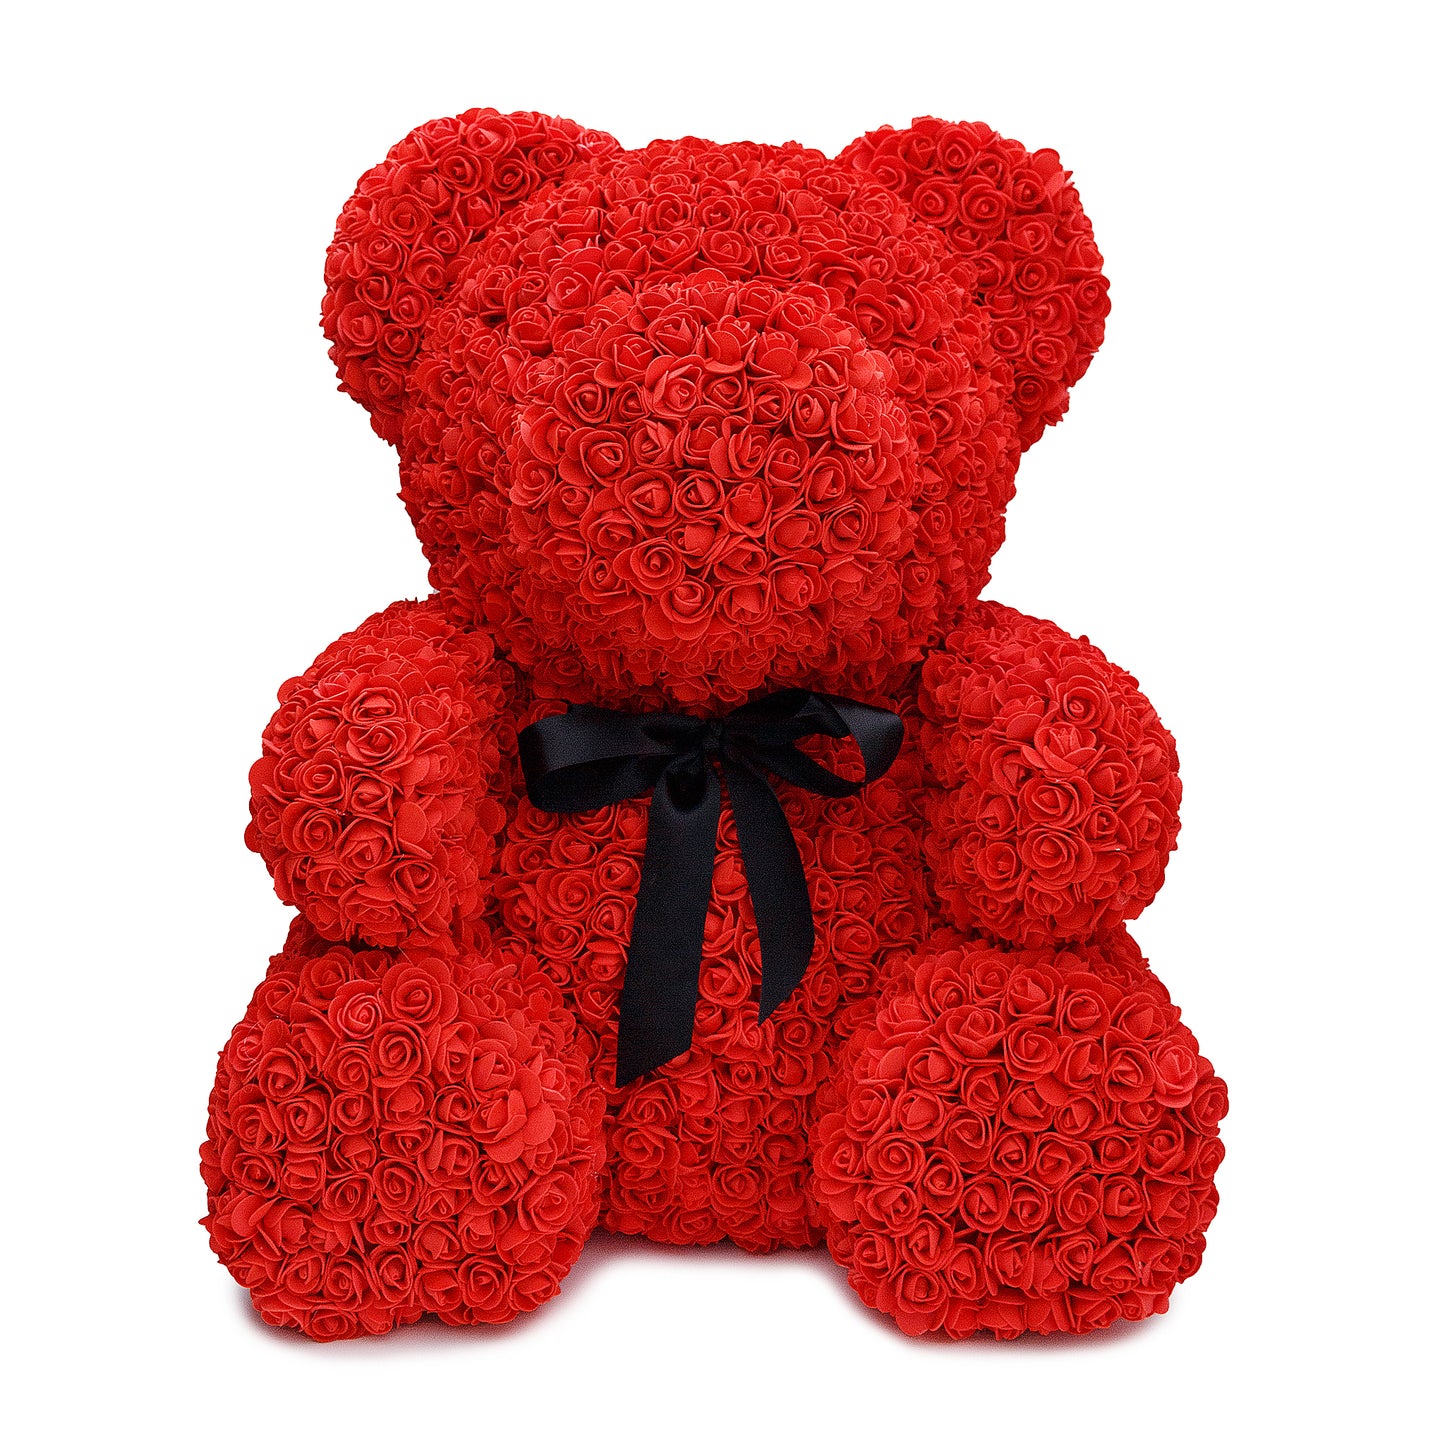 BIG Red Luxury Handmade Rose Teddy Bear -1